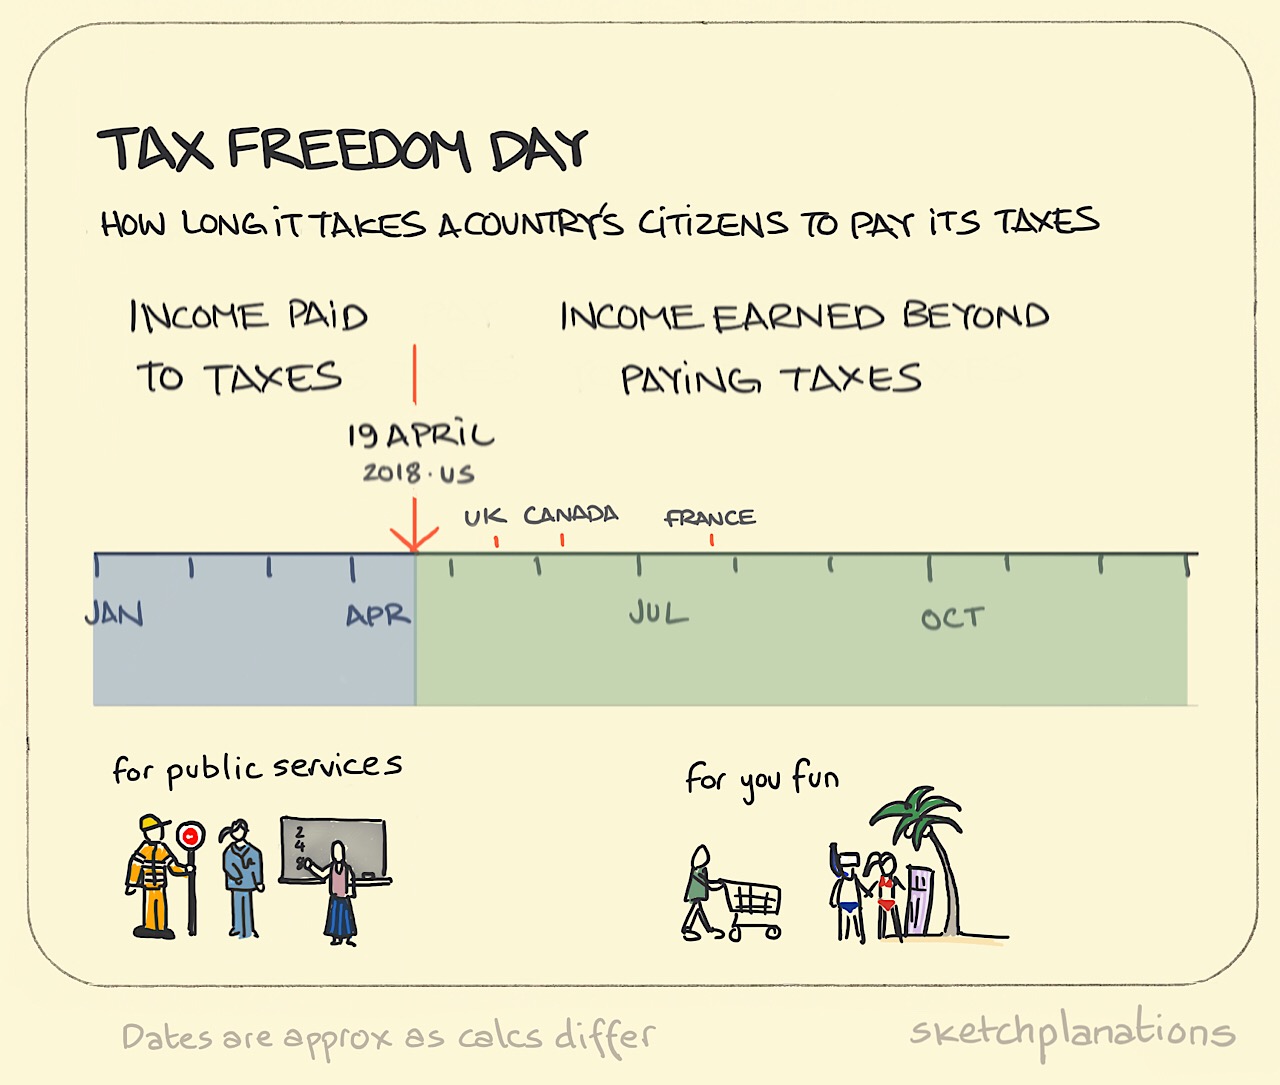 tax freedom day